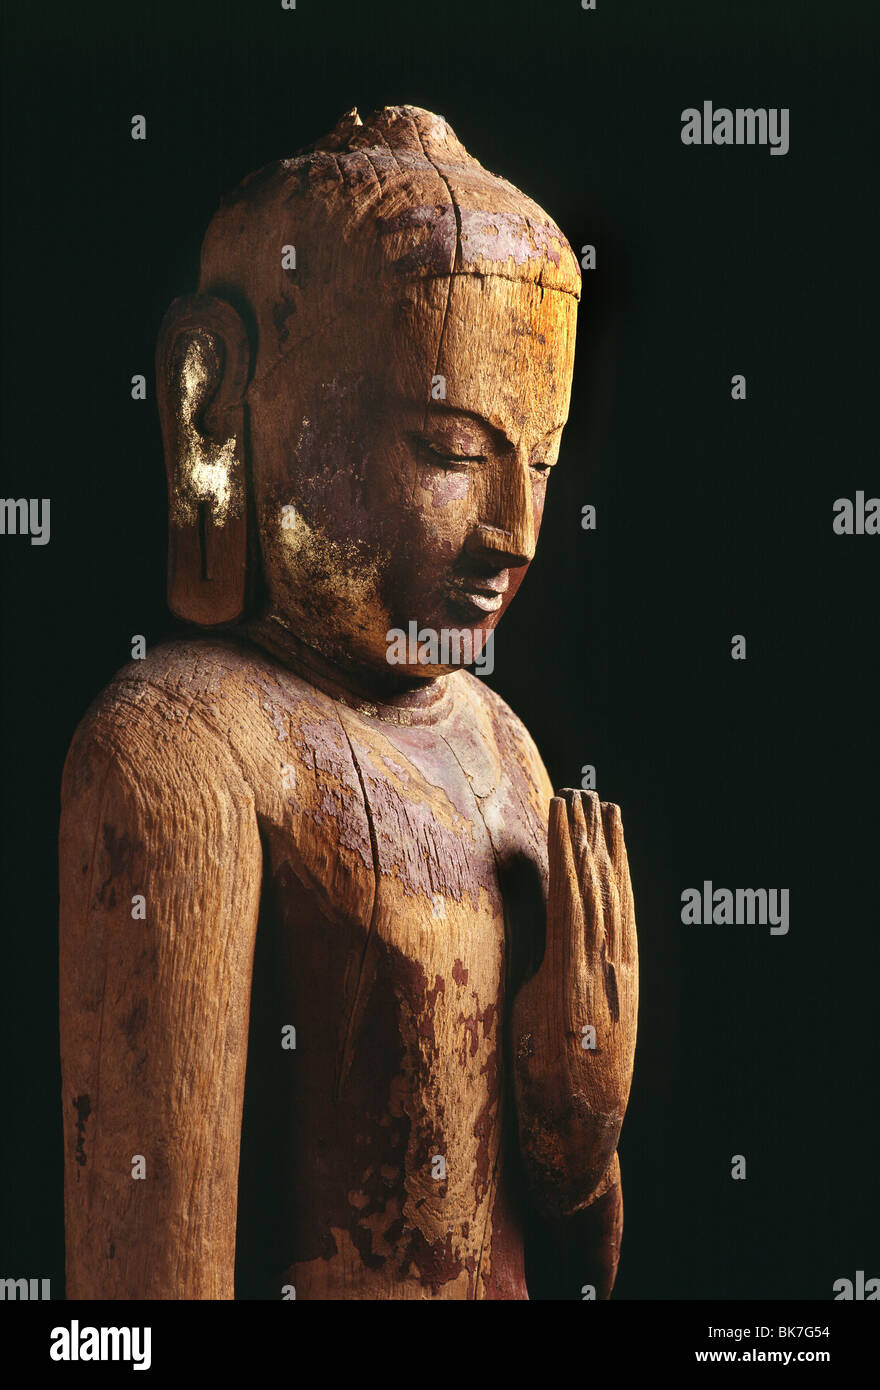 Immagine del Buddha, tardo stile pagana, Myanmar (Birmania), Asia Foto Stock